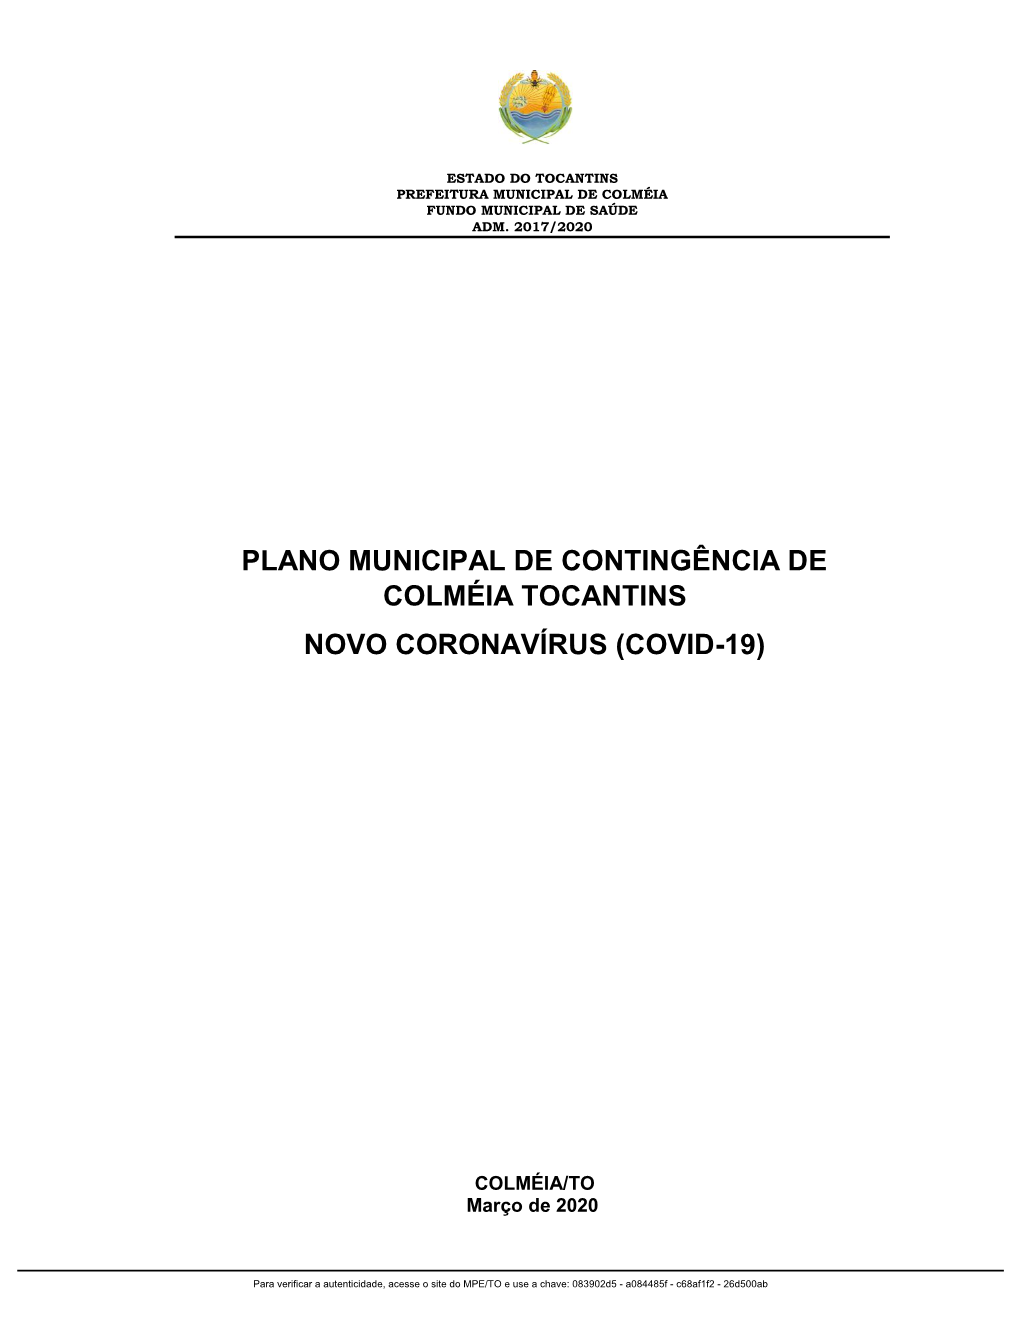 Plano Municipal De Contingência De Colméia Tocantins Novo Coronavírus (Covid-19)